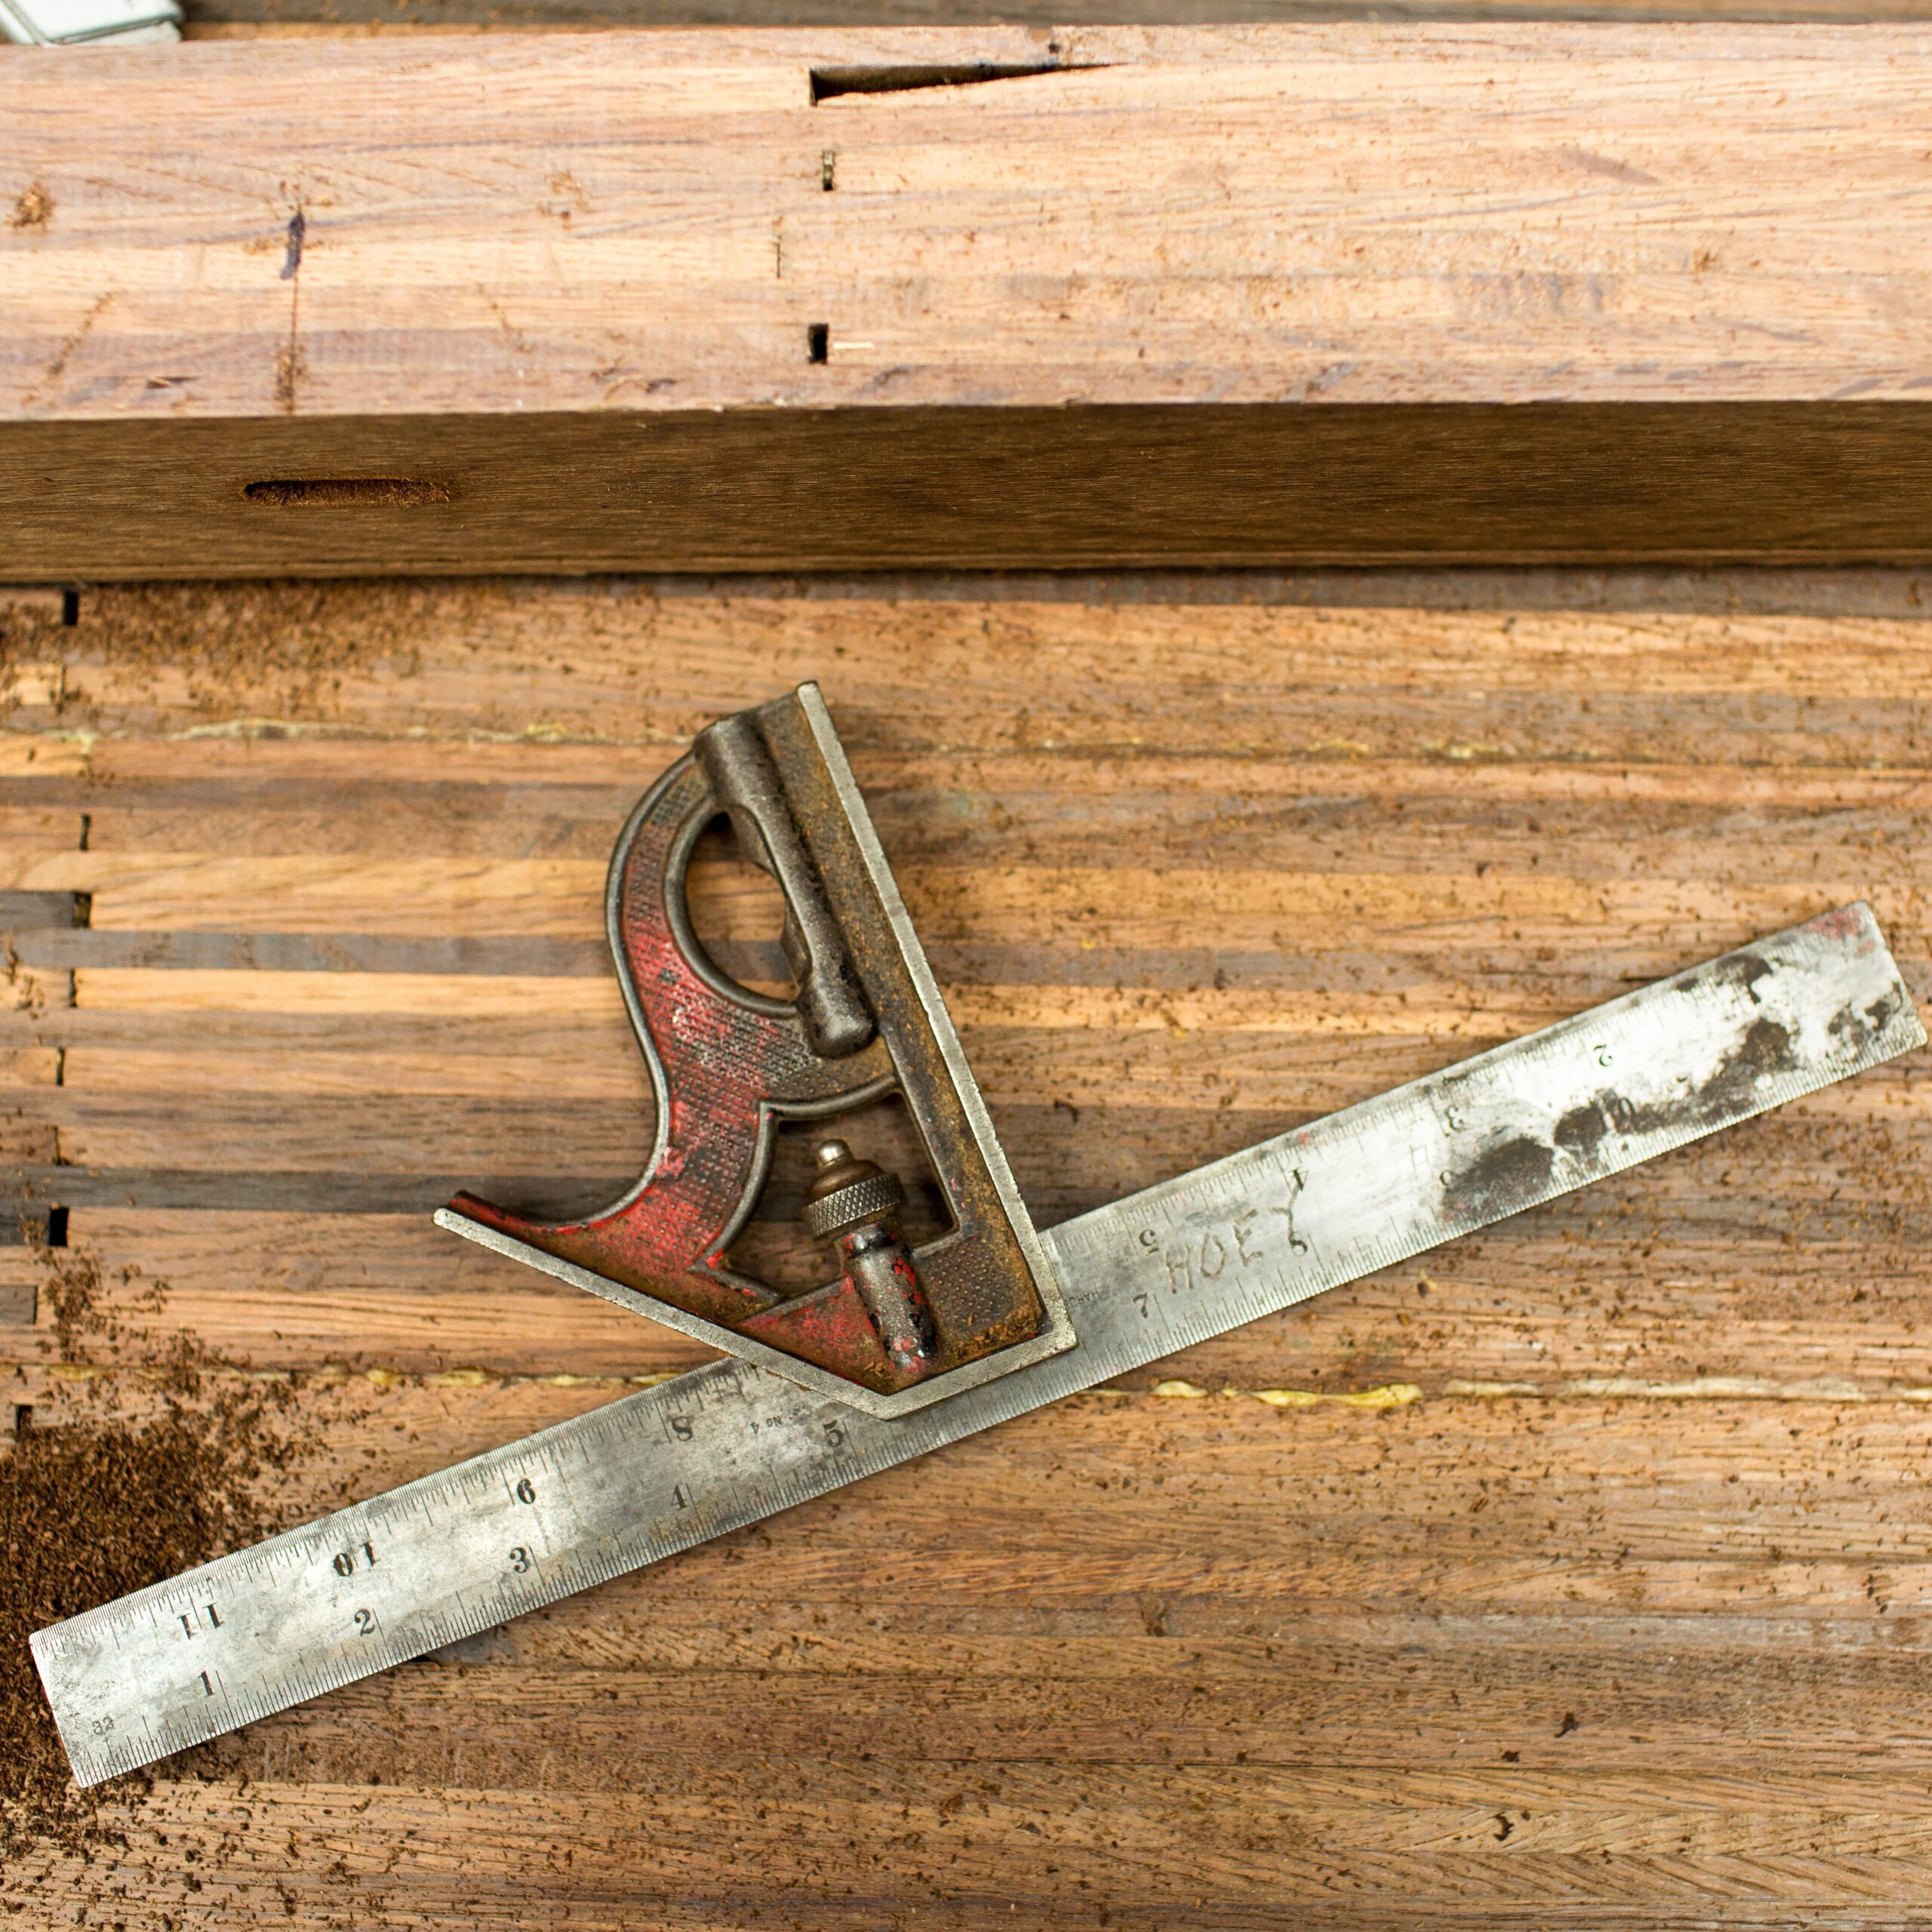 Well worn tool resting on lumber.